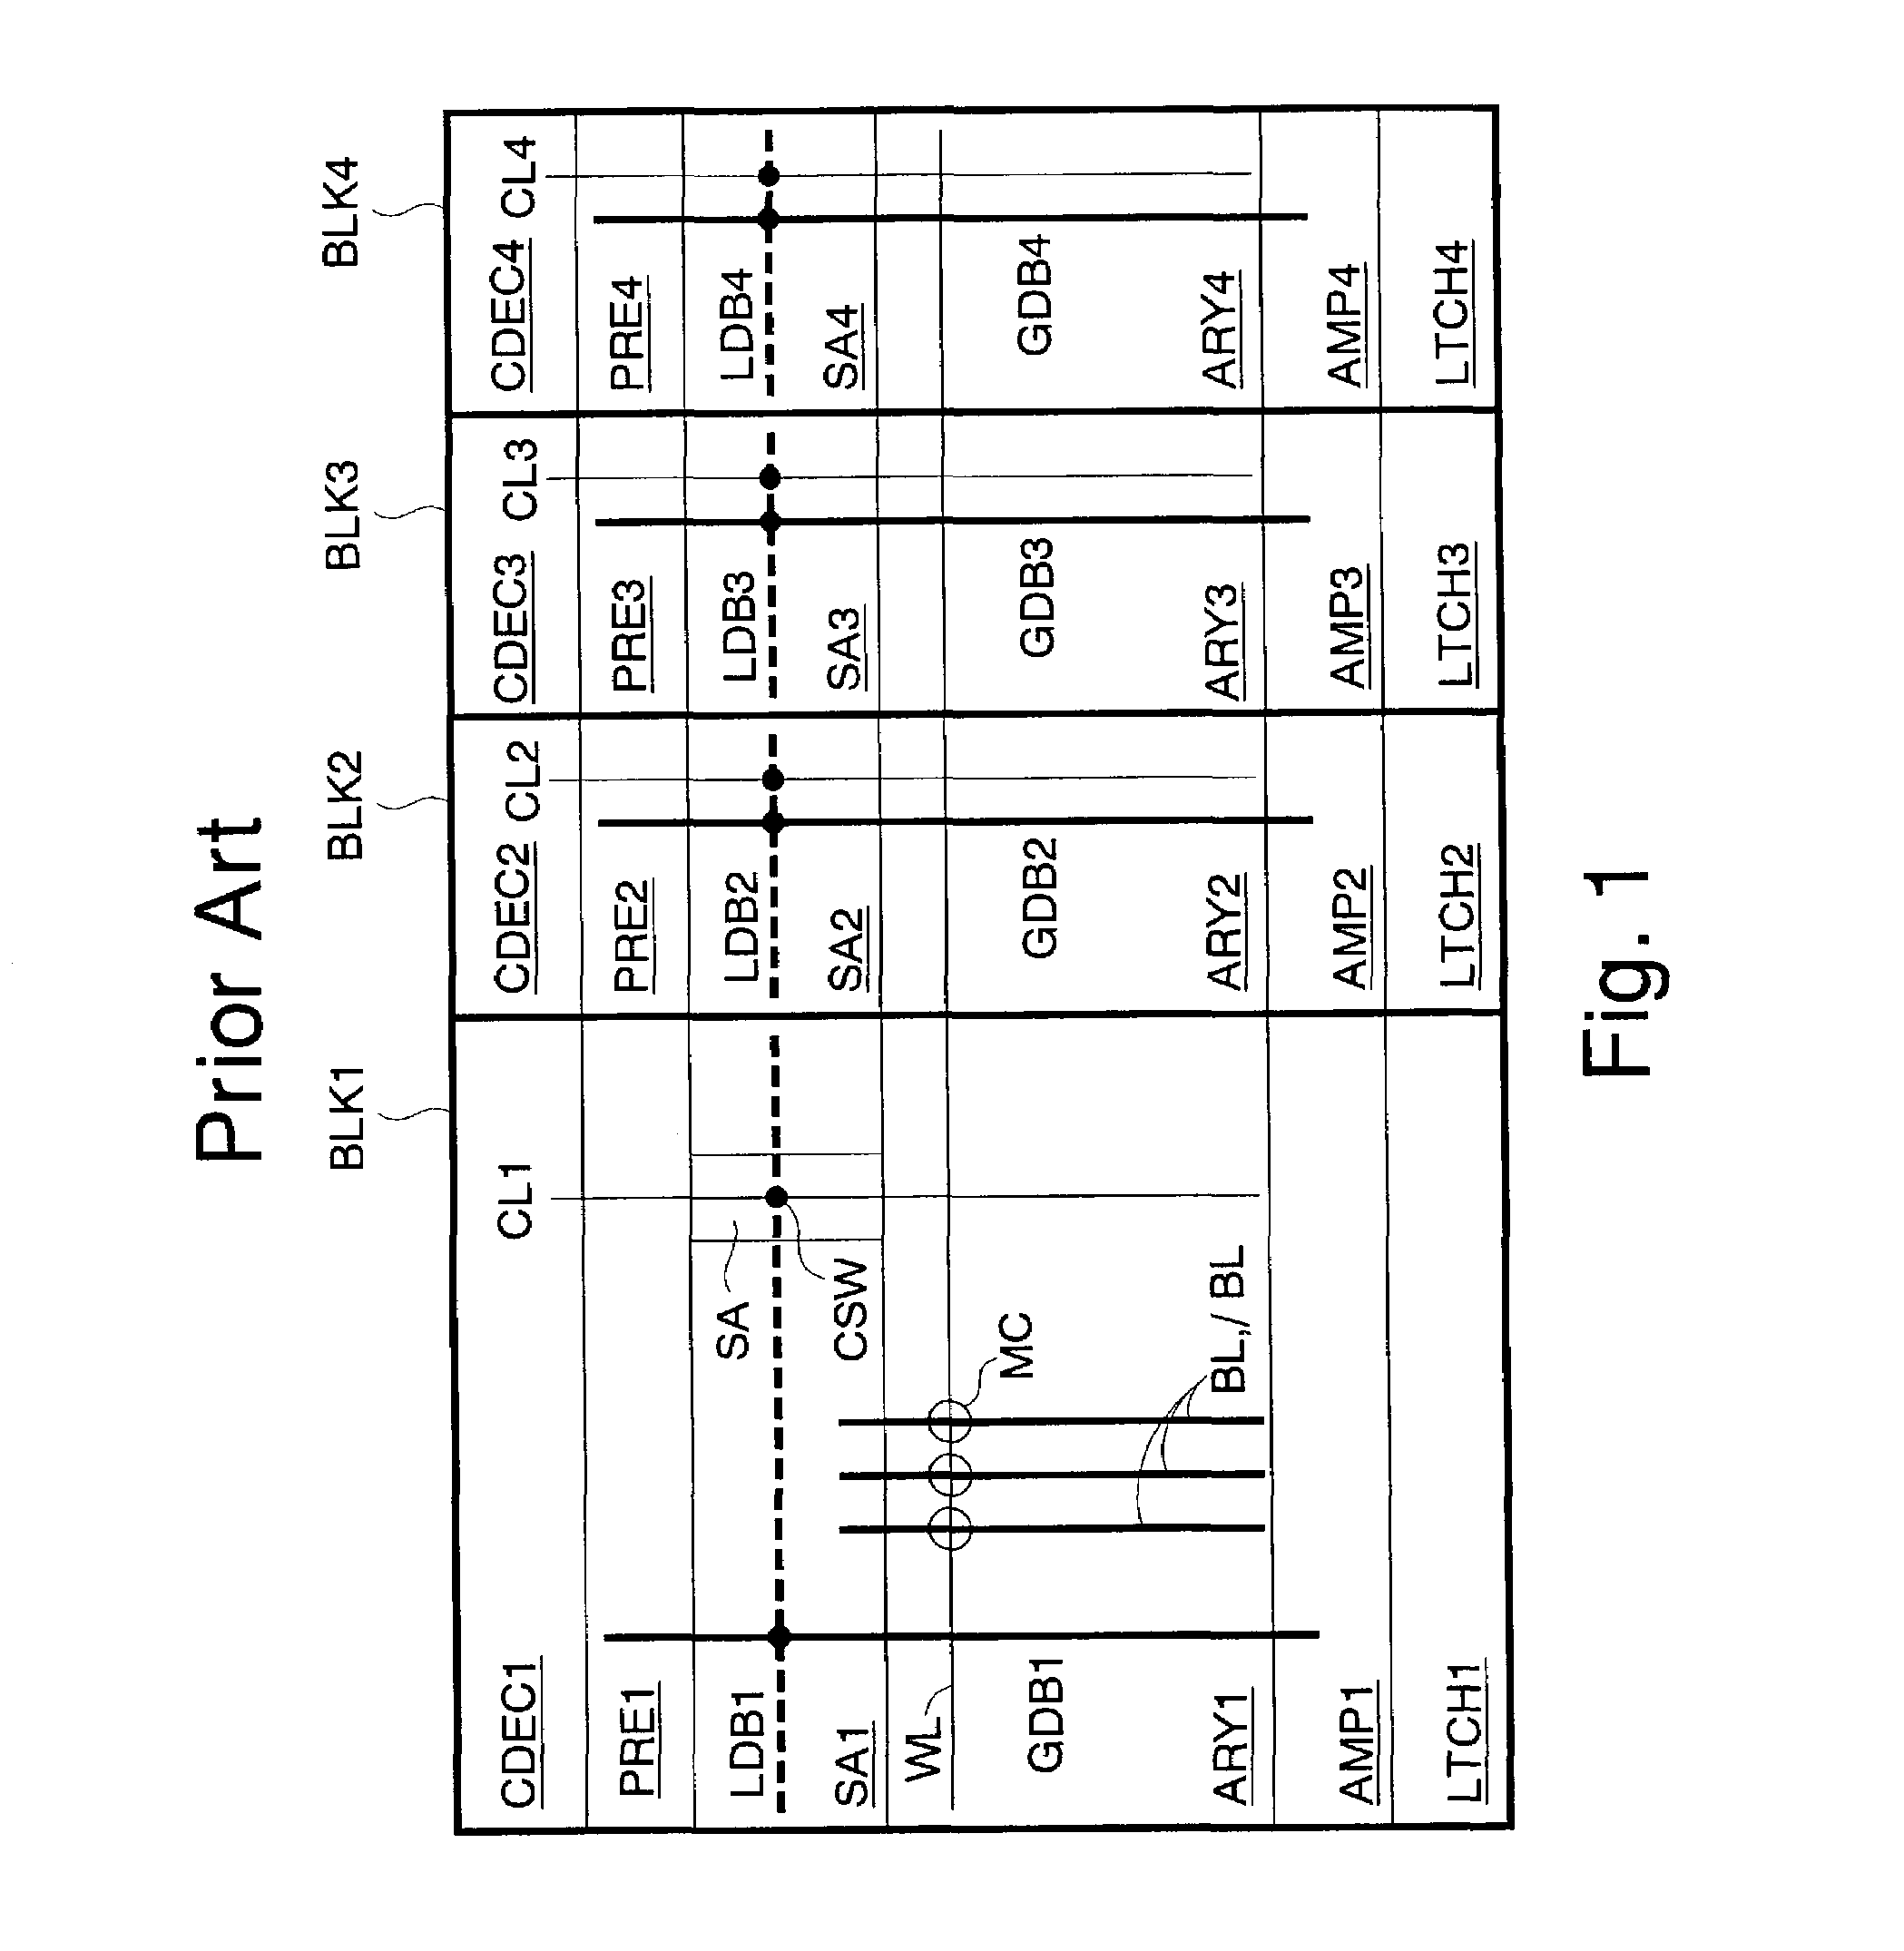 Semiconductor memory having a pulse generator for generating column pulses